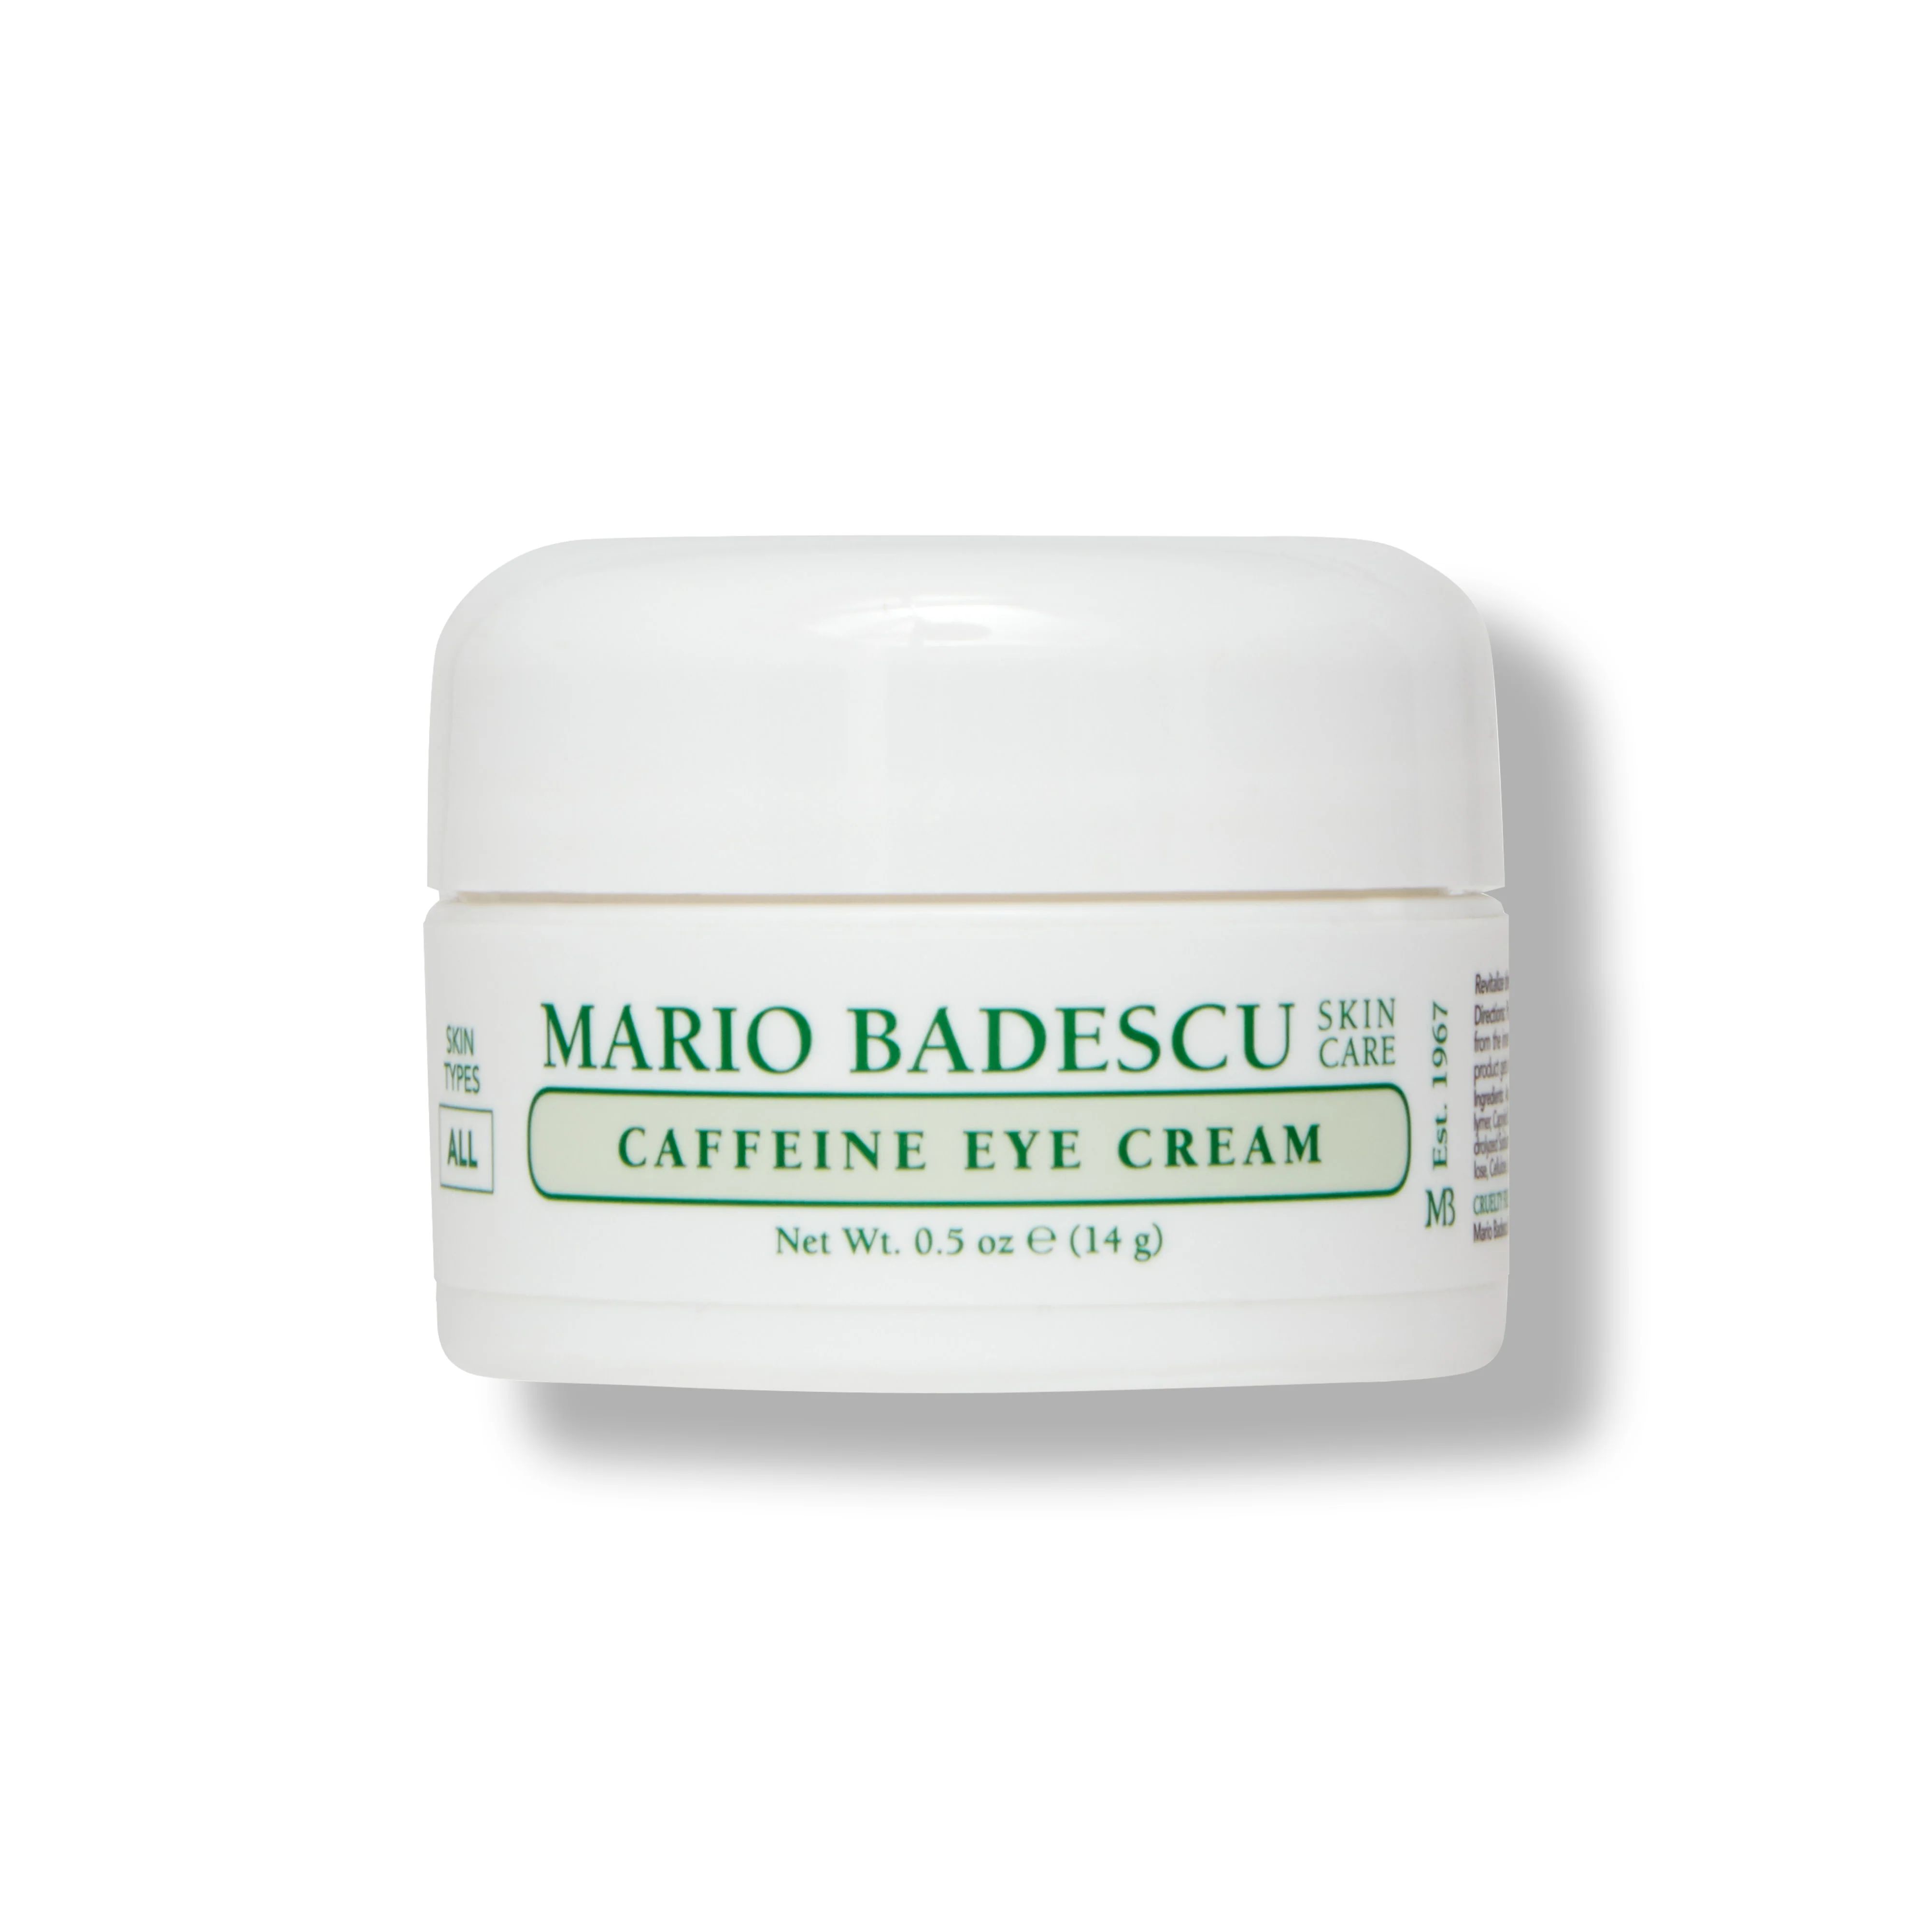 Caffeine Eye Cream - Depuff & Hydrate the Eyes | Mario Badescu | Mario Badescu